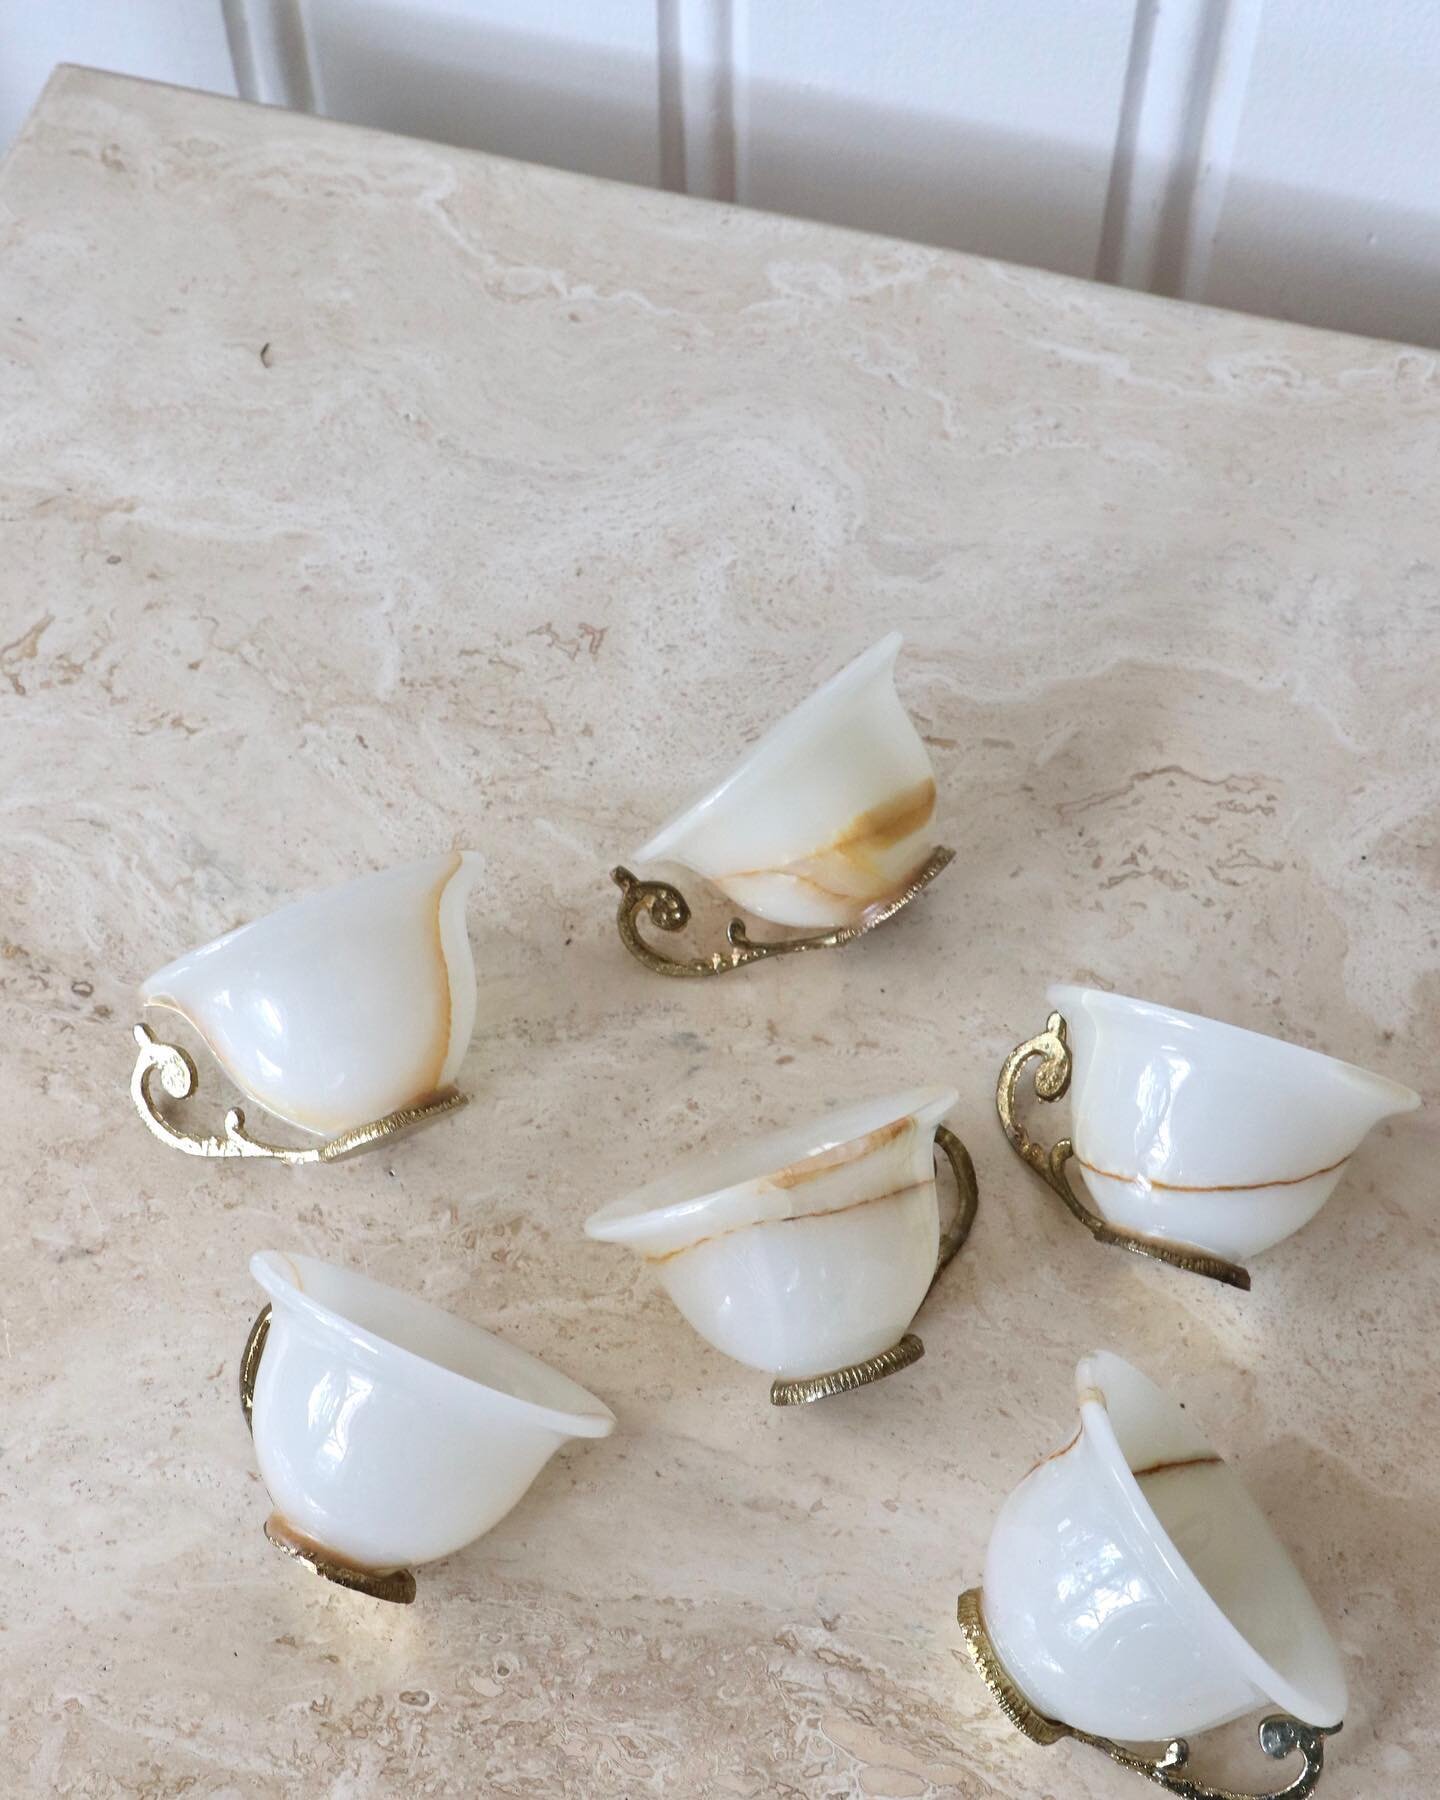 Set of 6 vintage onyx tea cups in pristine condition. $145 for the set 

#interiordesign #homedecor #art #vintage